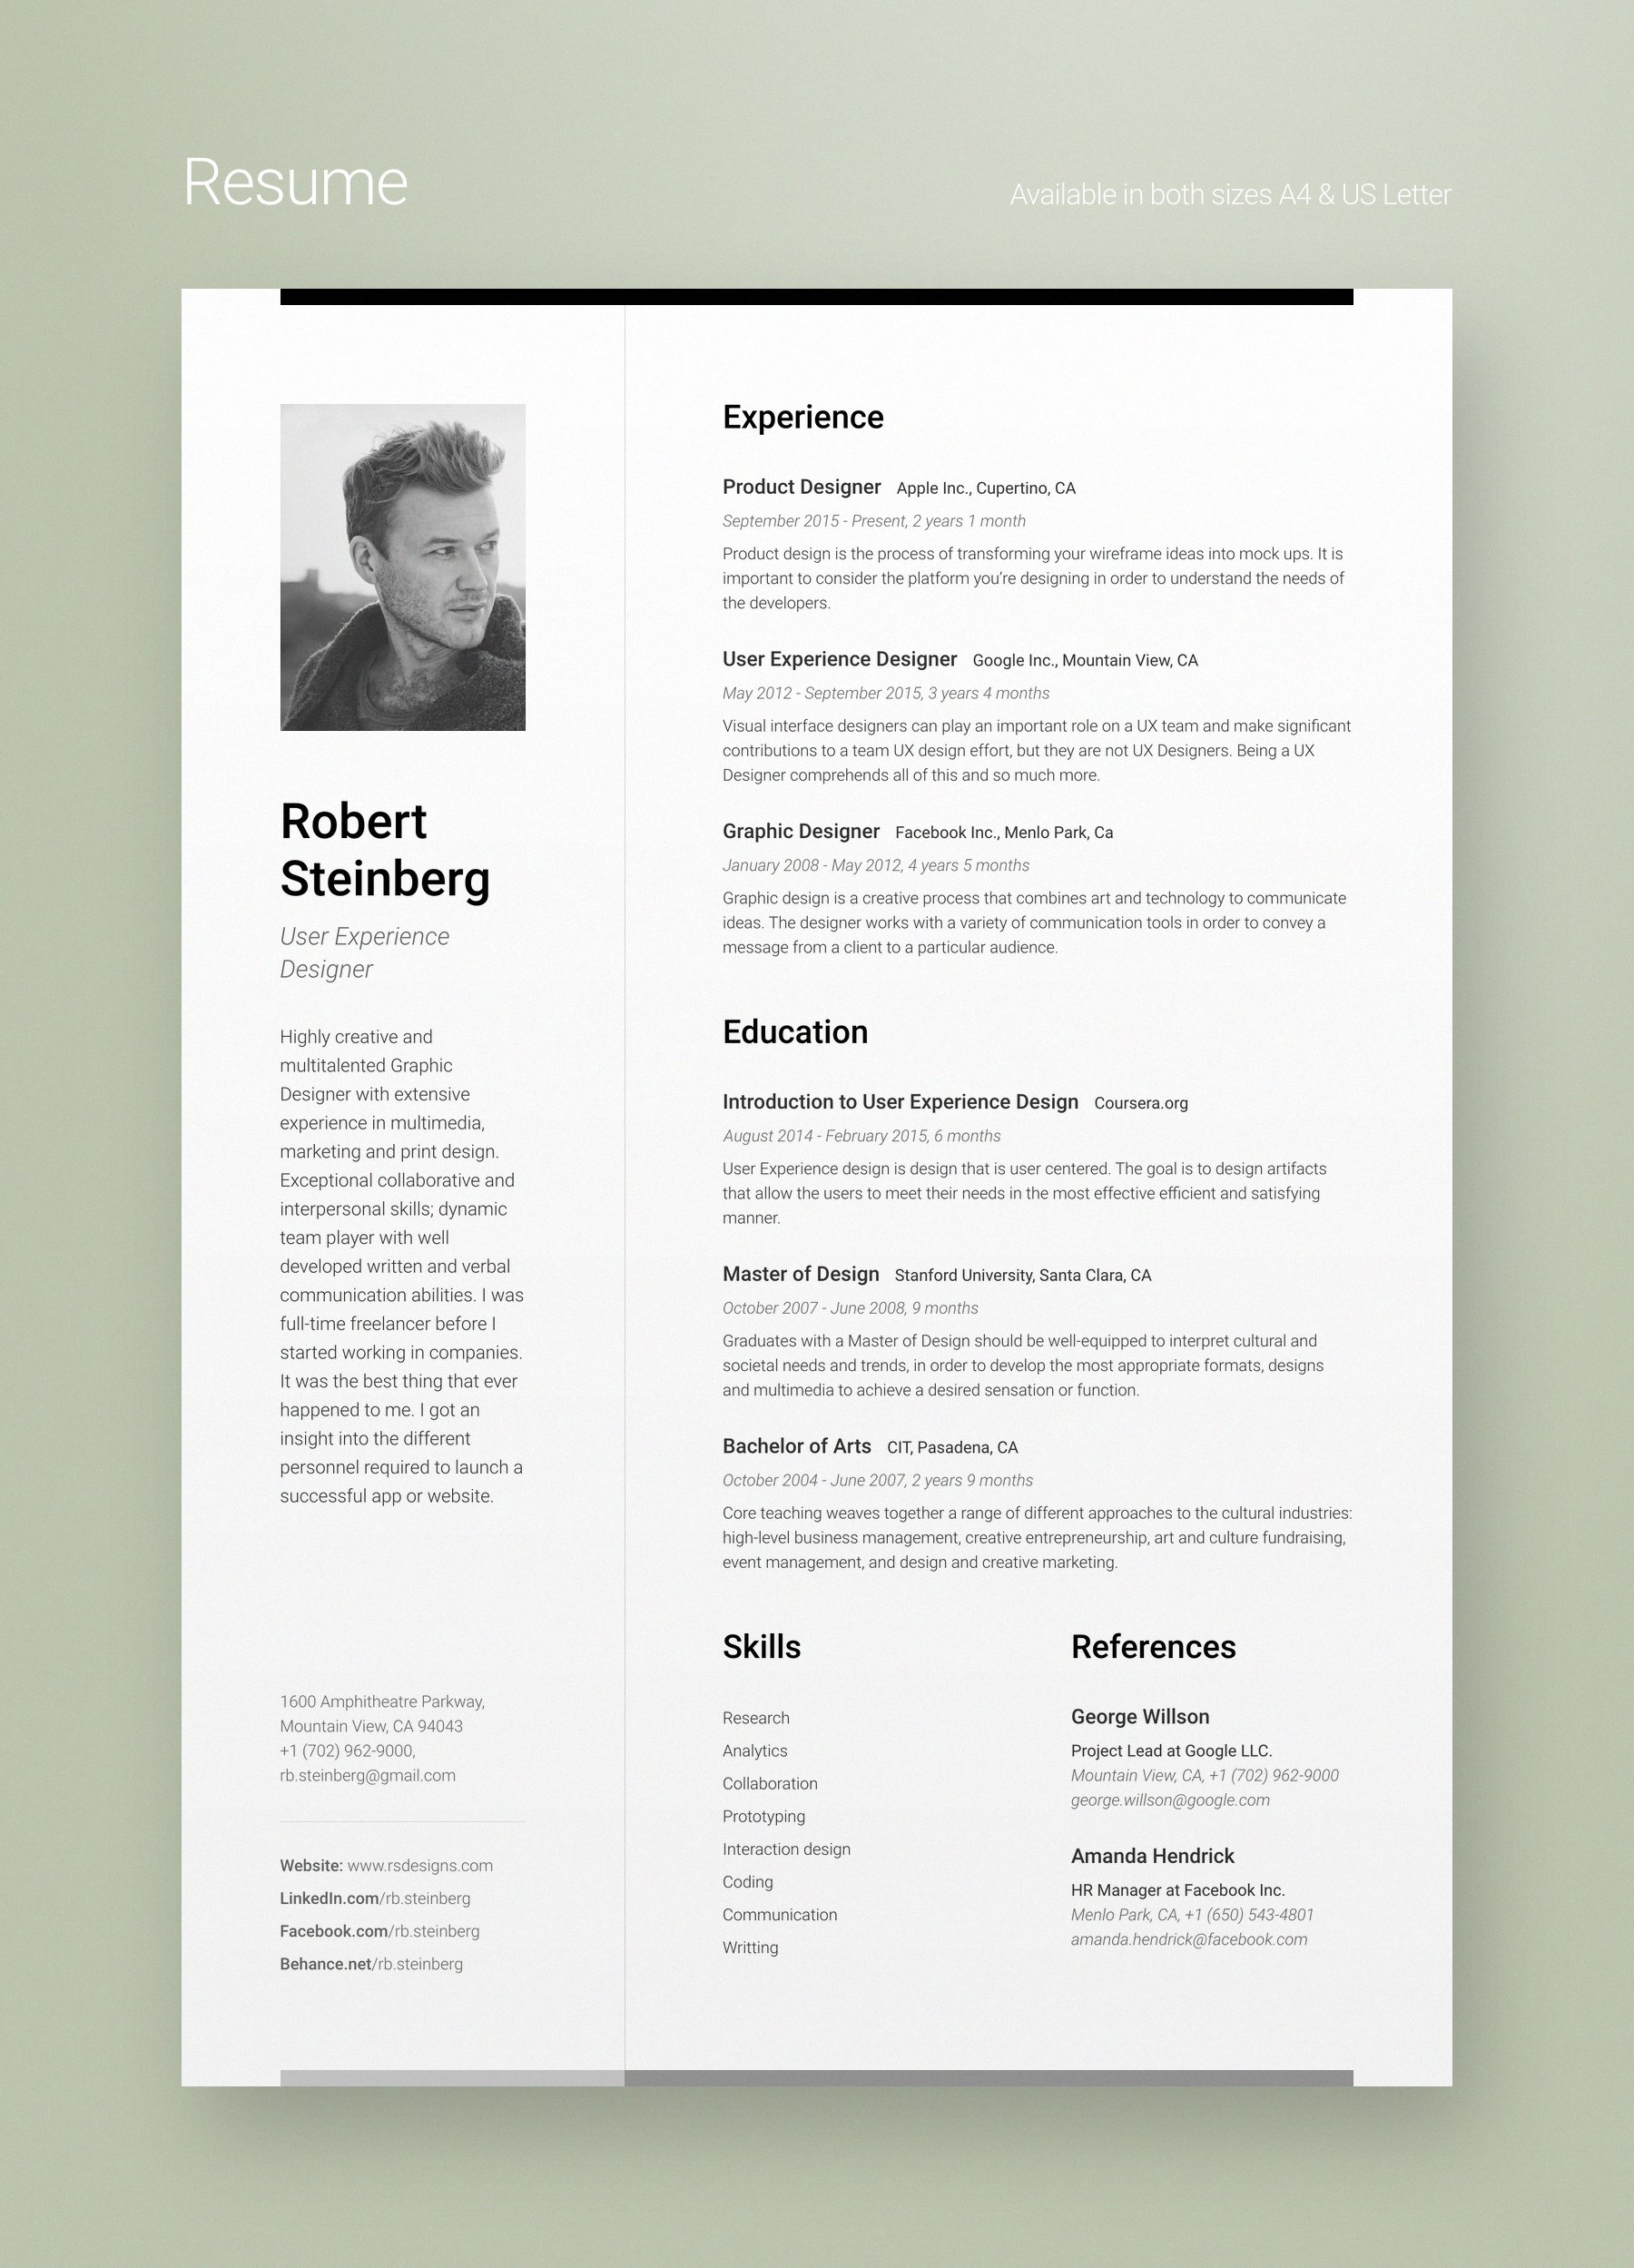 Resume & CV Bundle 1 Vertical preview image.